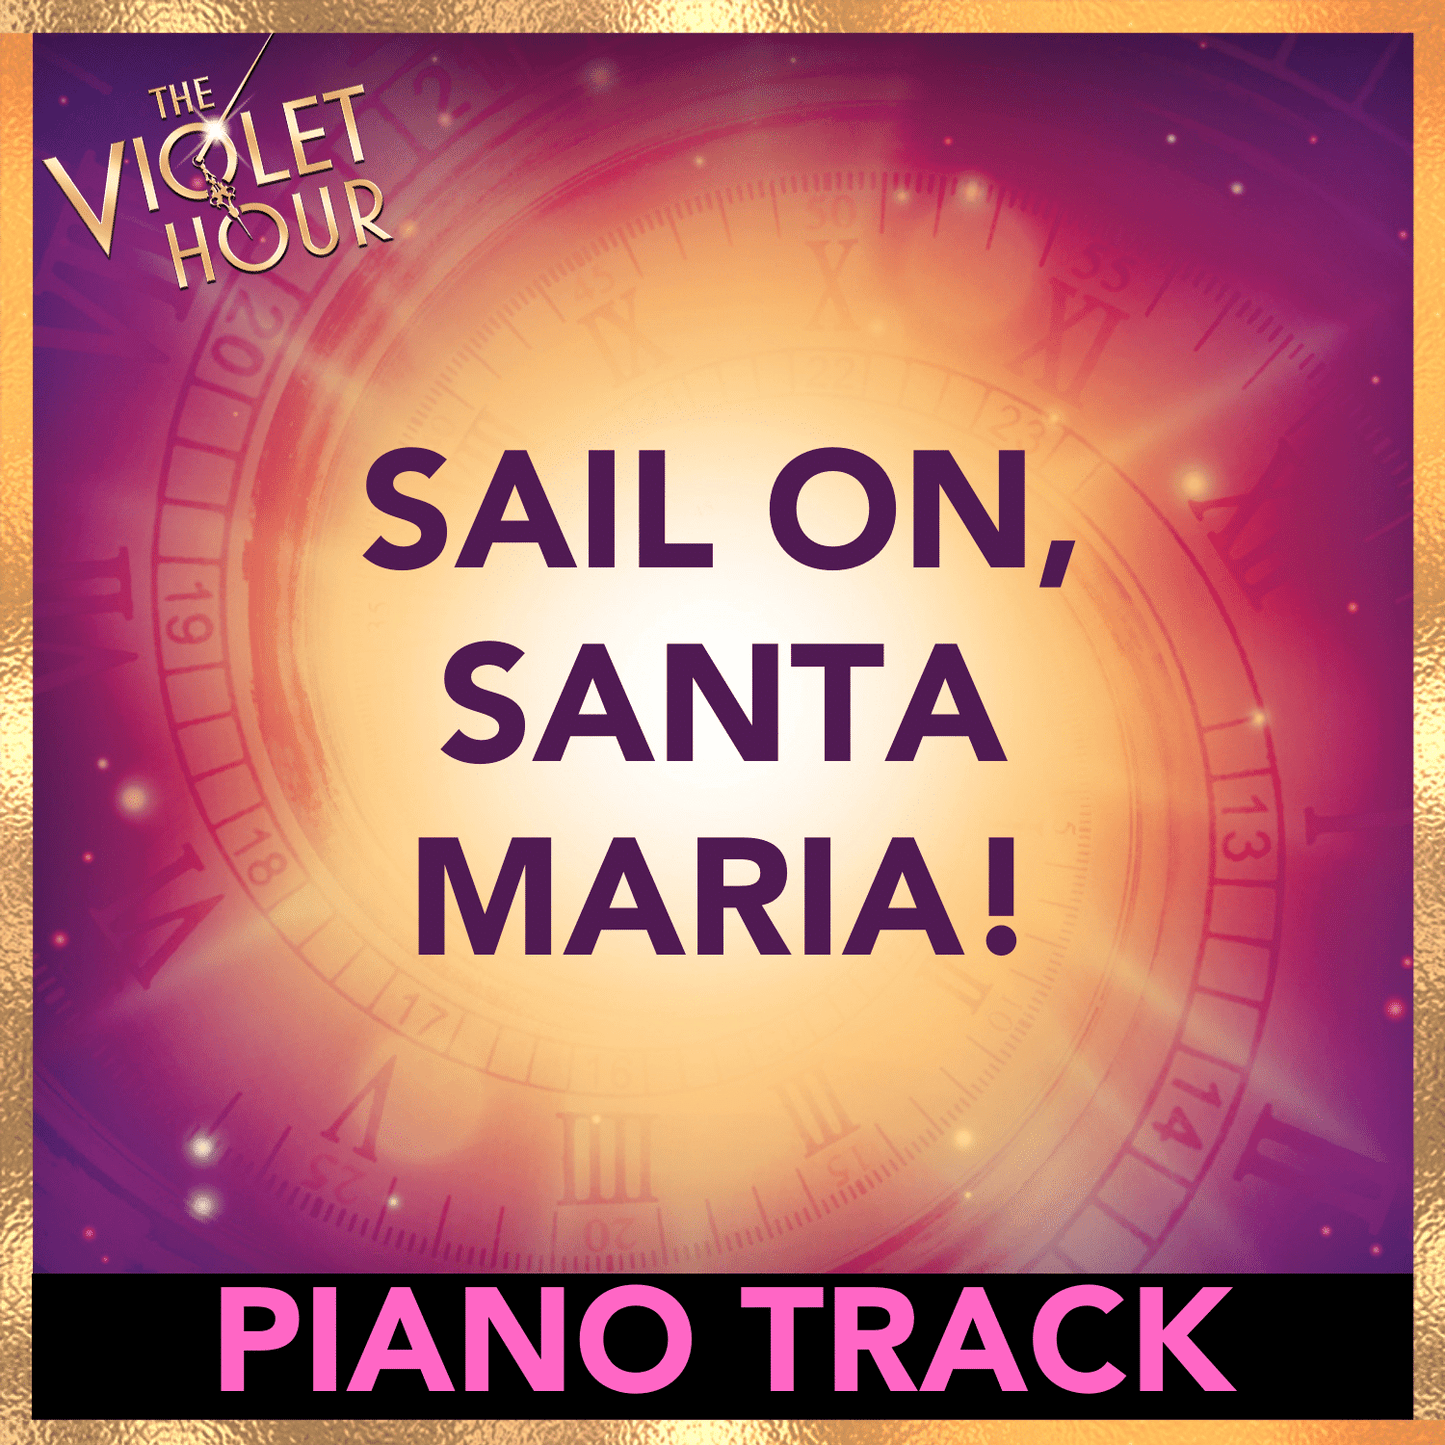 SAIL ON, SANTA MARIA! (Piano Track)